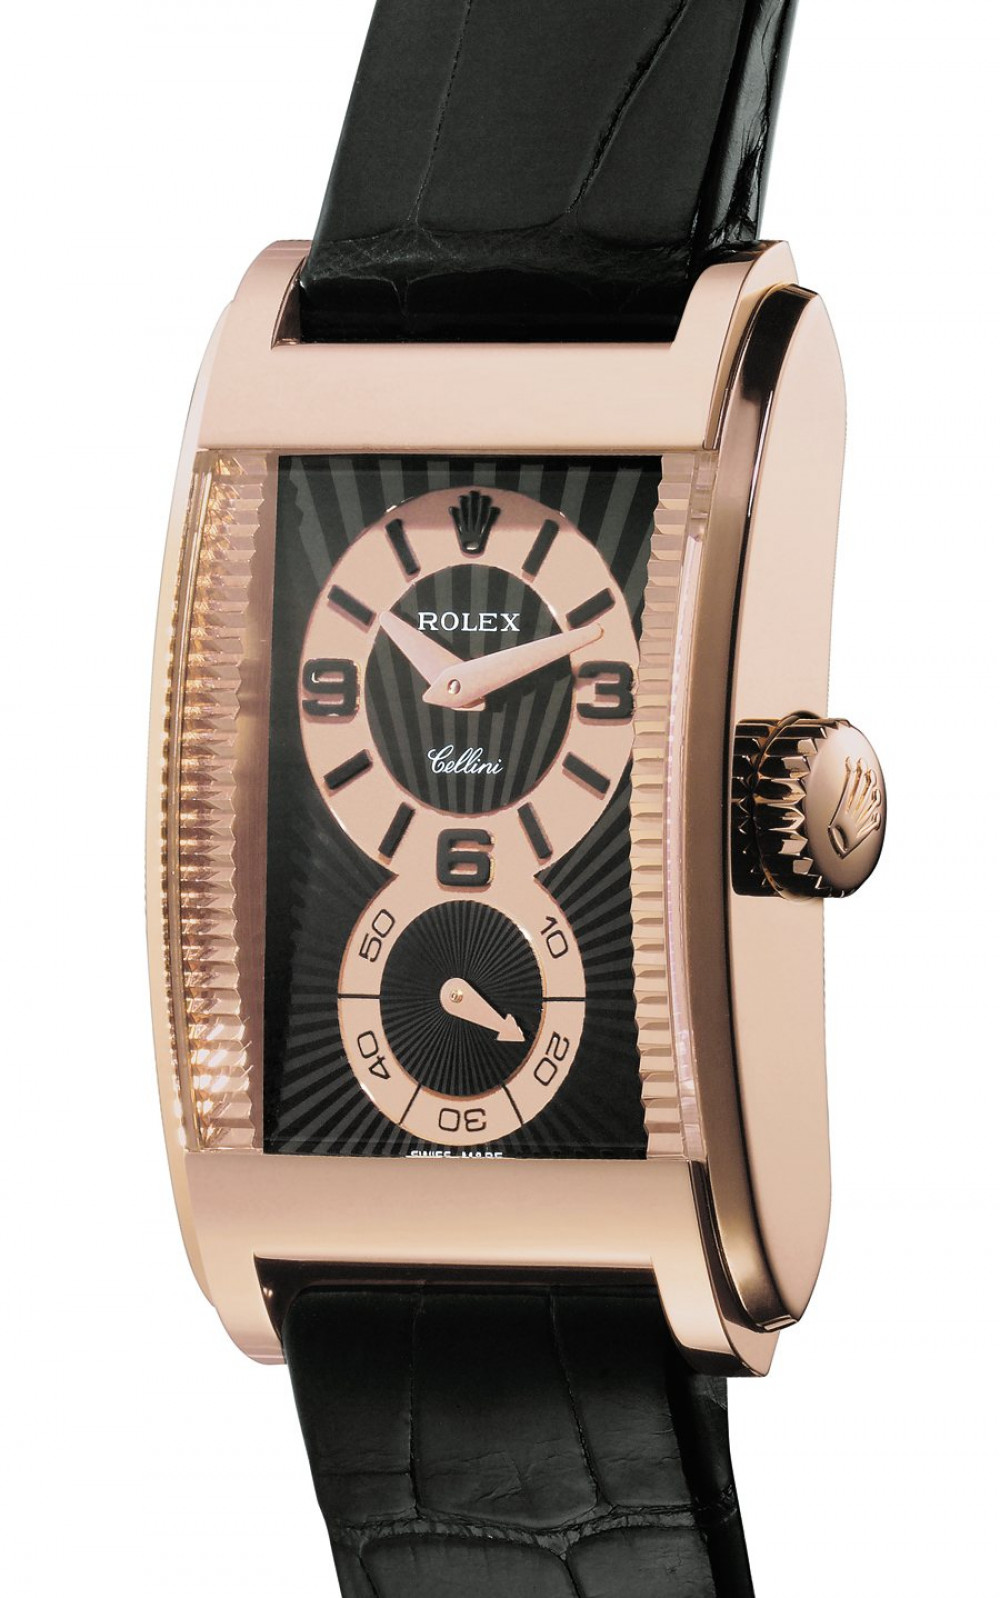 Zegarek firmy Rolex, model Prince